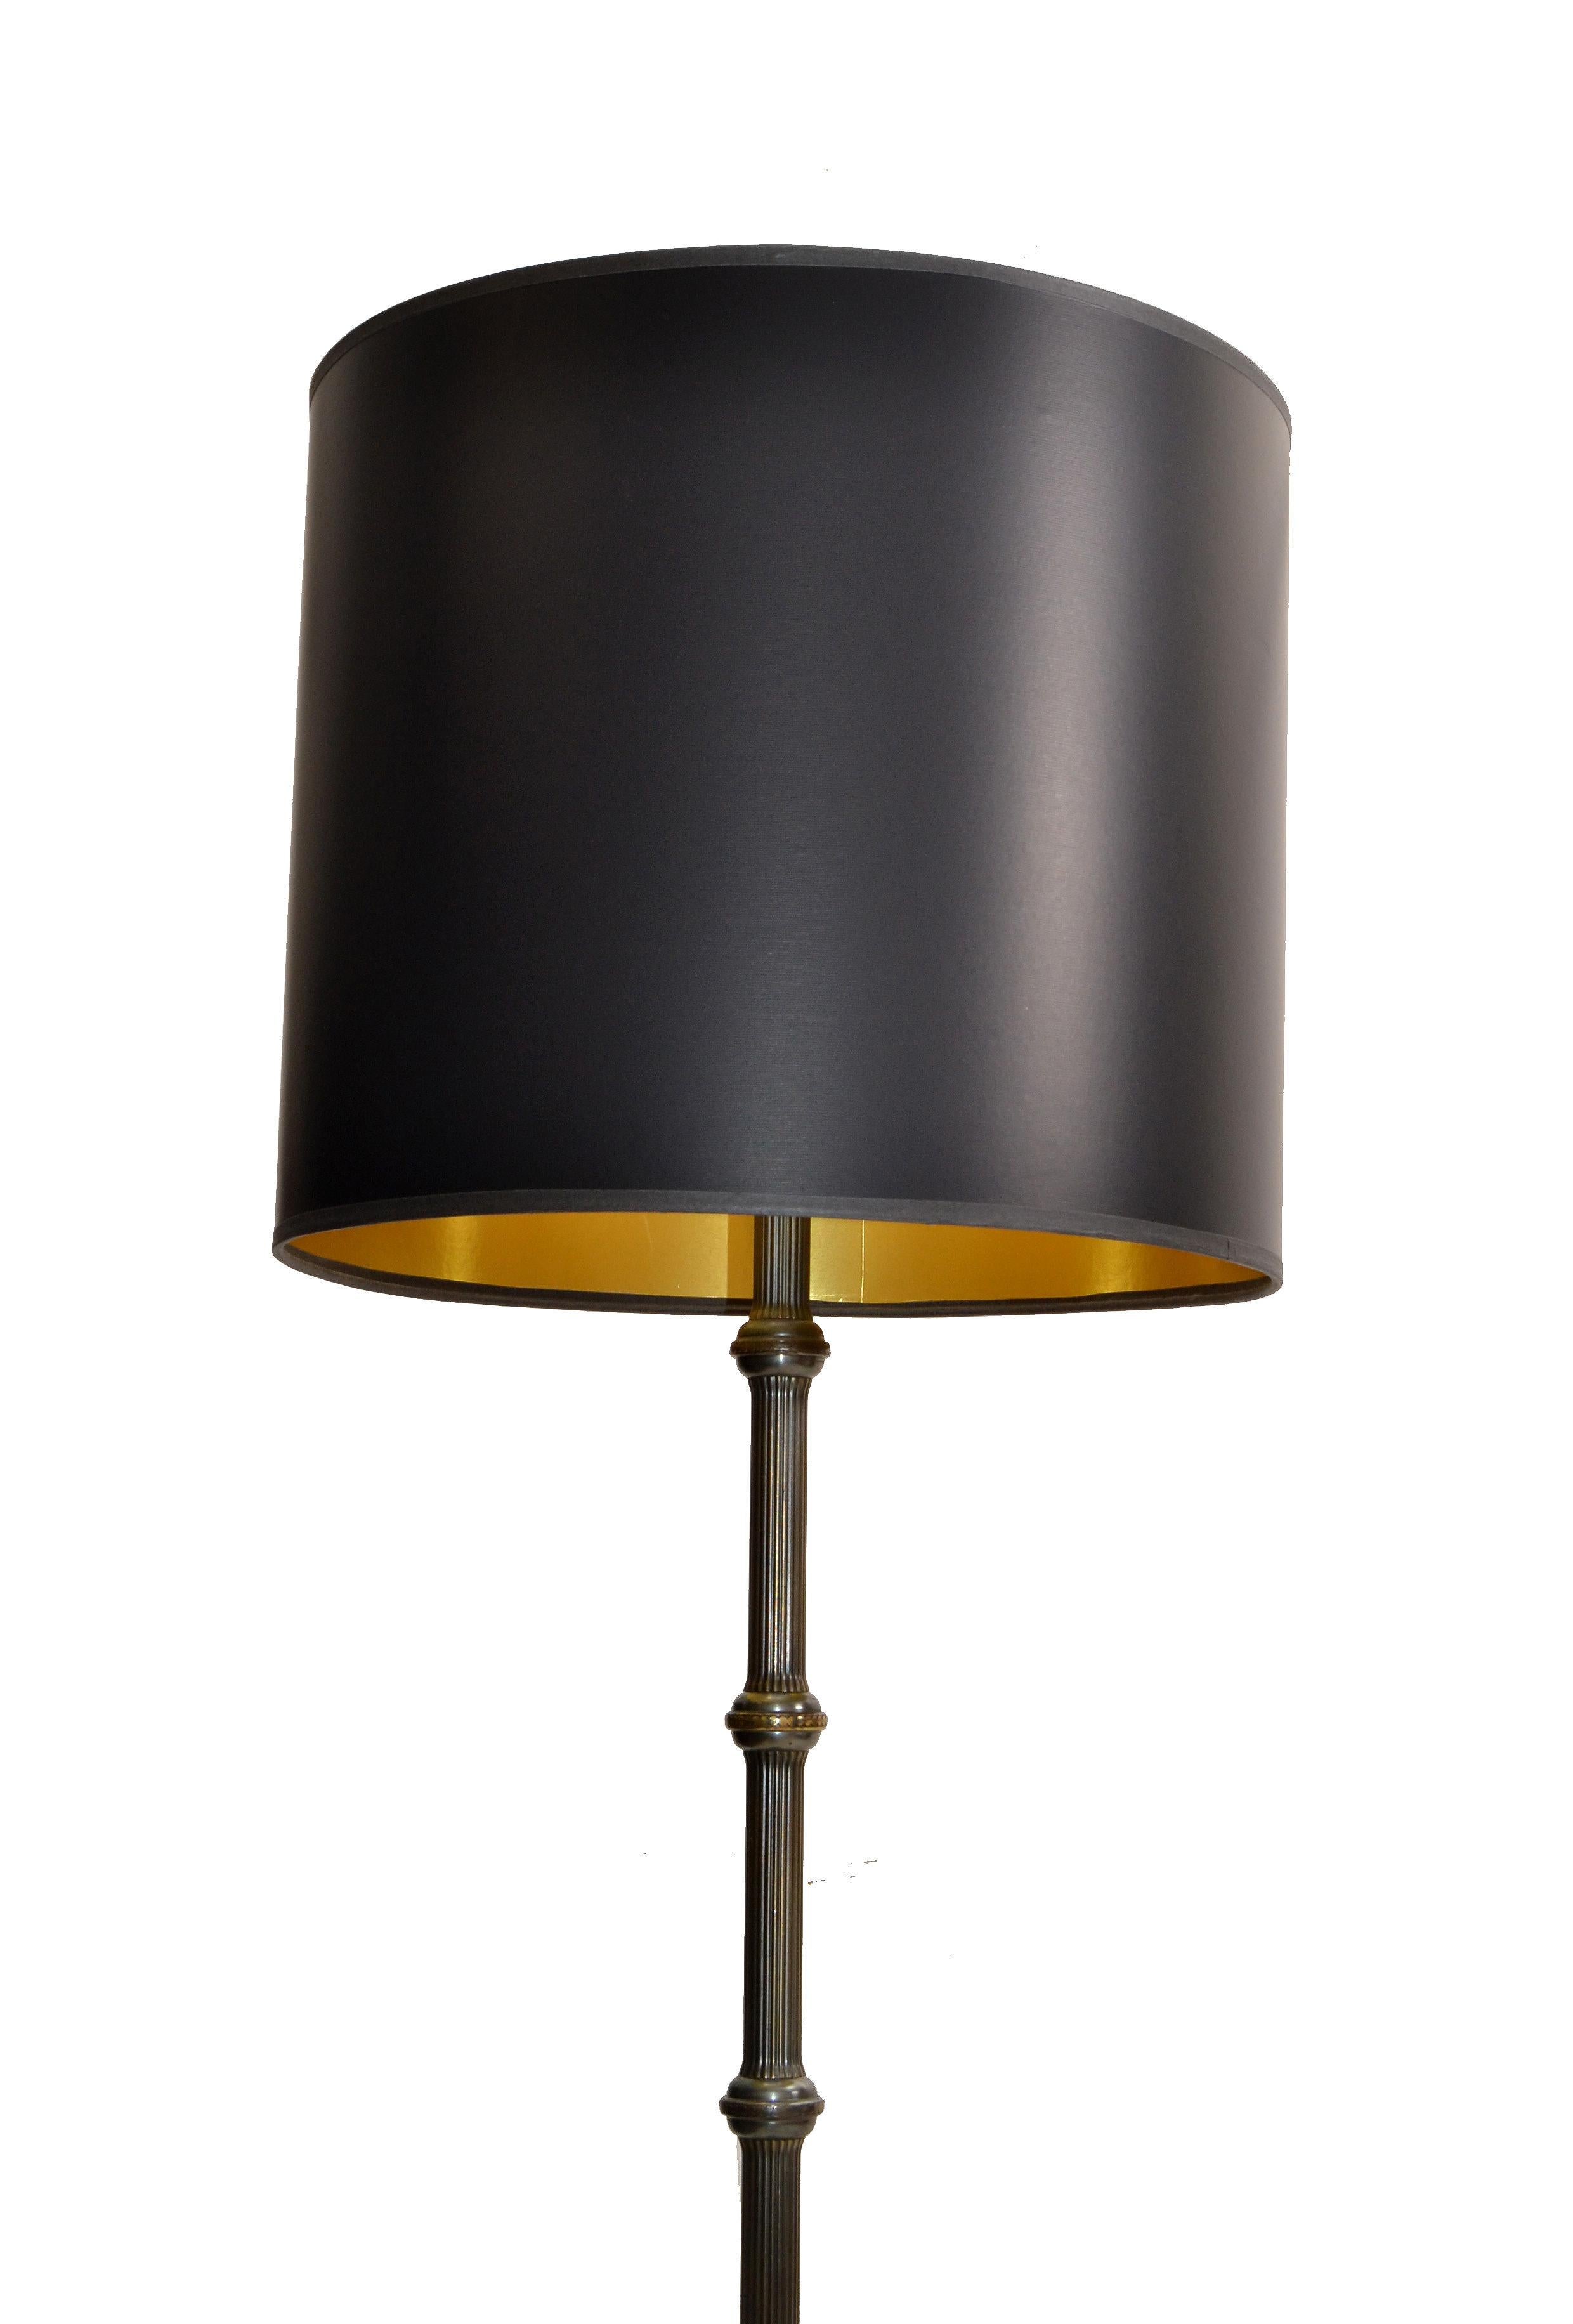 Maison Jansen Silvered Bronze & Brass Floor Lamp Mid-Century Modern France 1950 For Sale 4